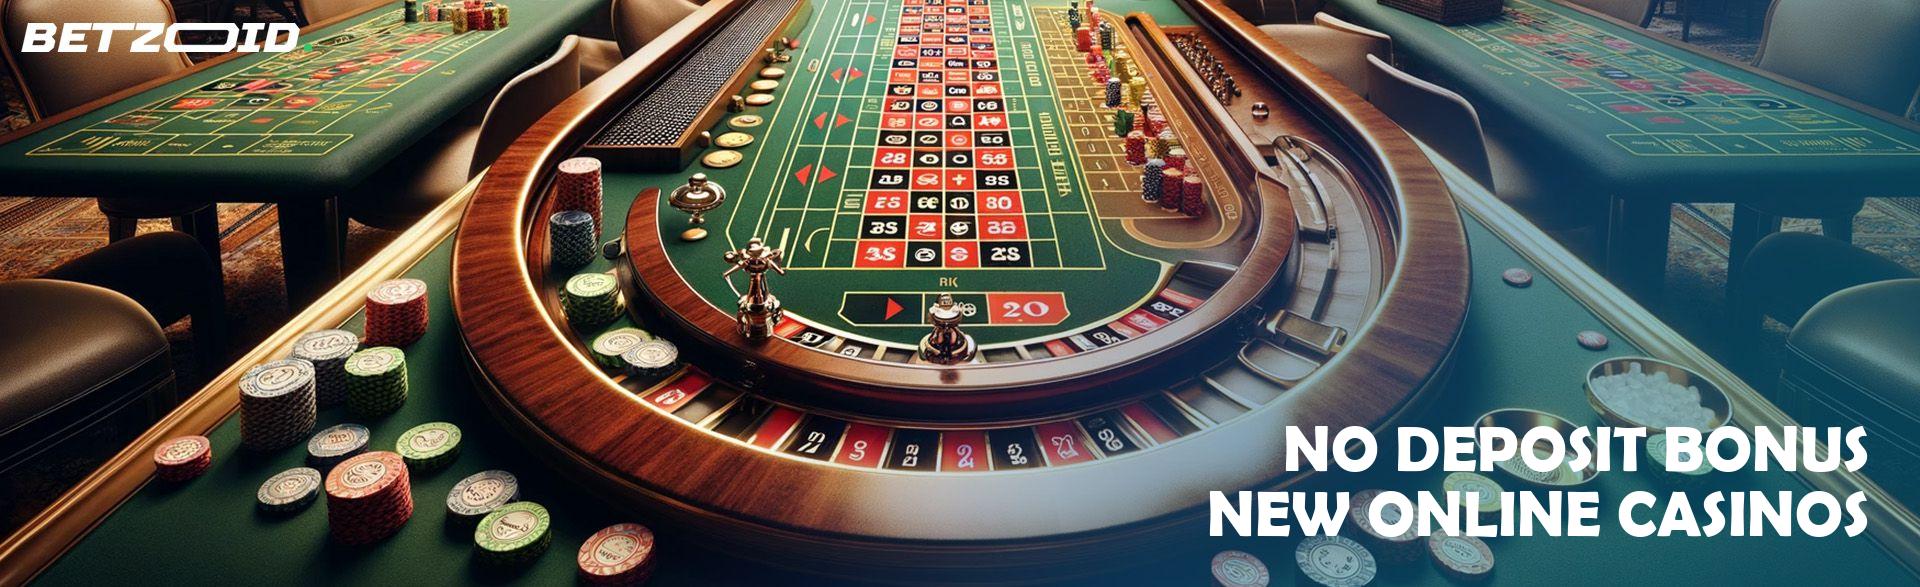 No Deposit Bonus New Online Casinos.